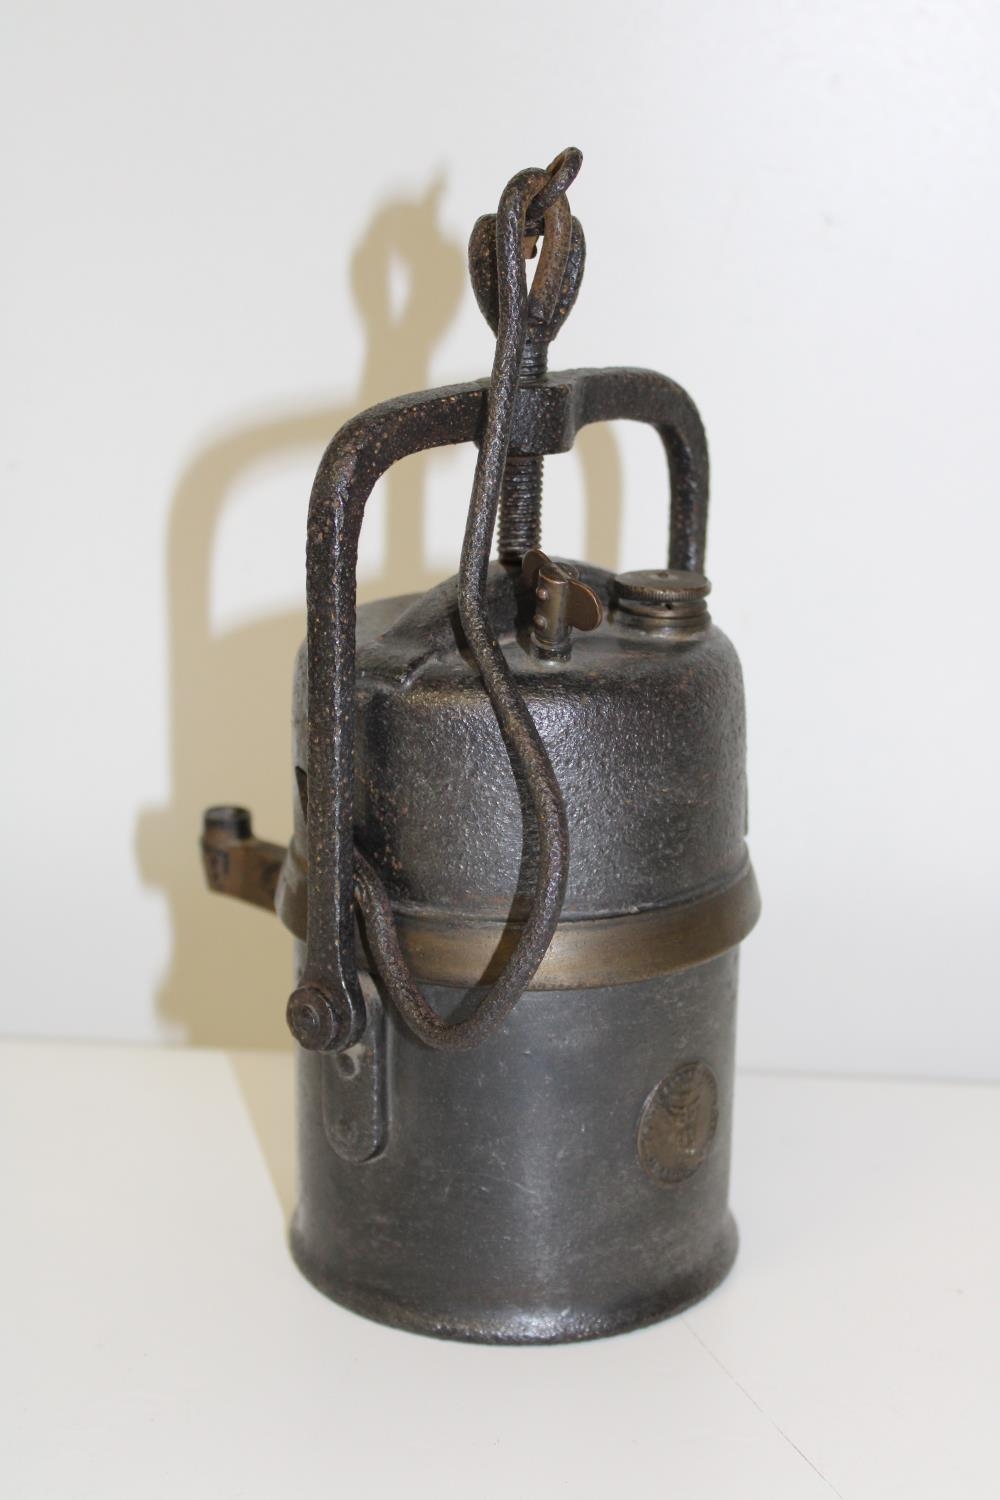 A vintage miners carbide lamp.